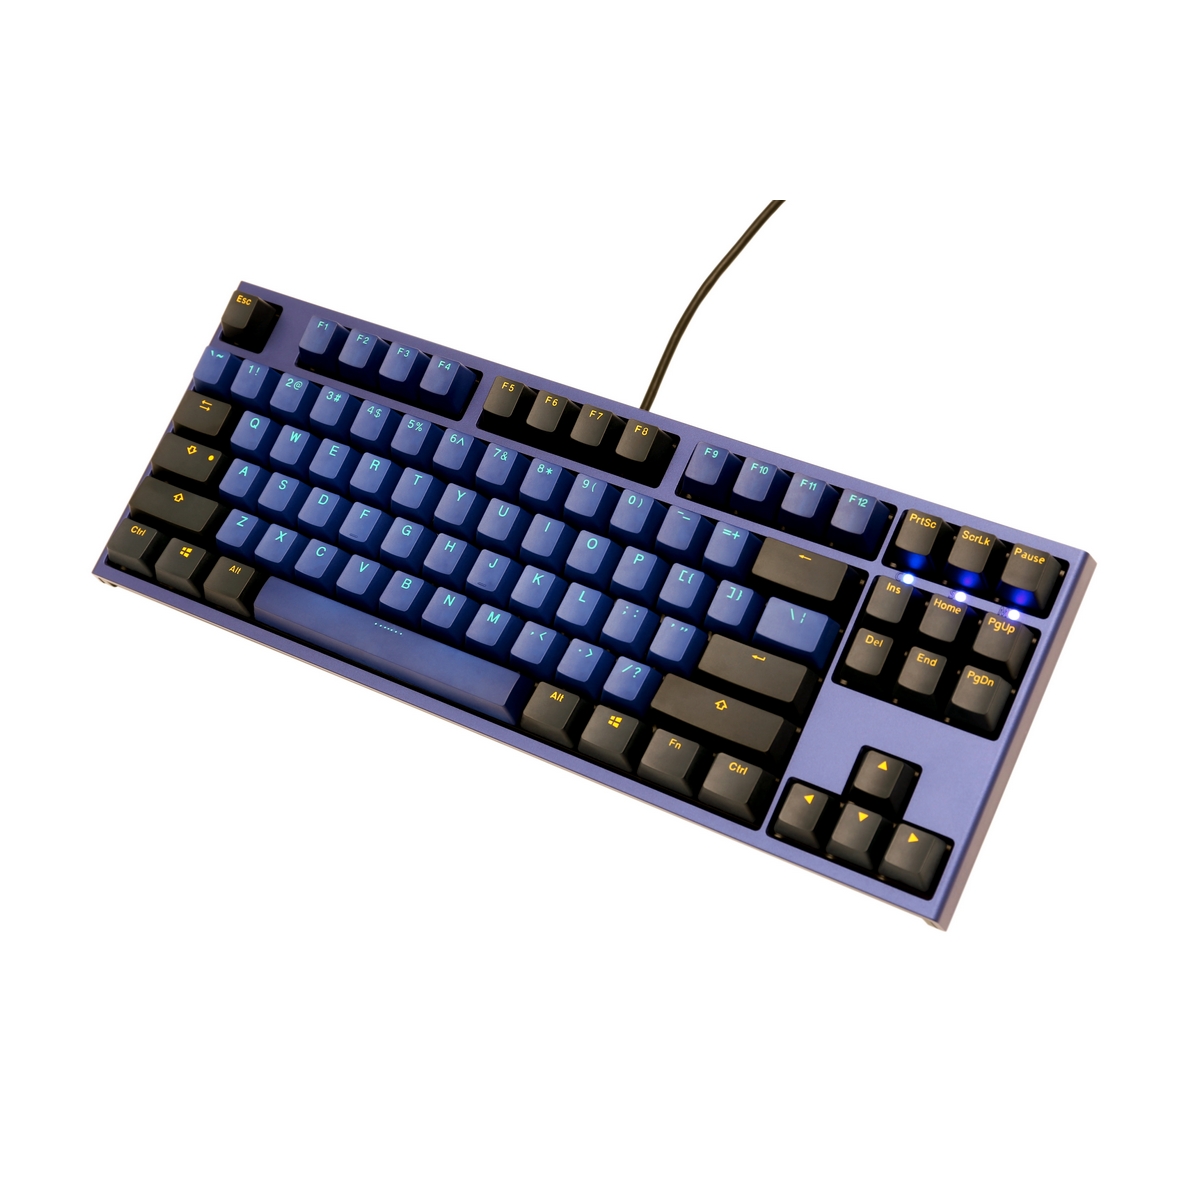 Ducky One 2 TKL Horizon Brown Cherry MX Switch USB Mechanical Gaming Keyboard UK Layout